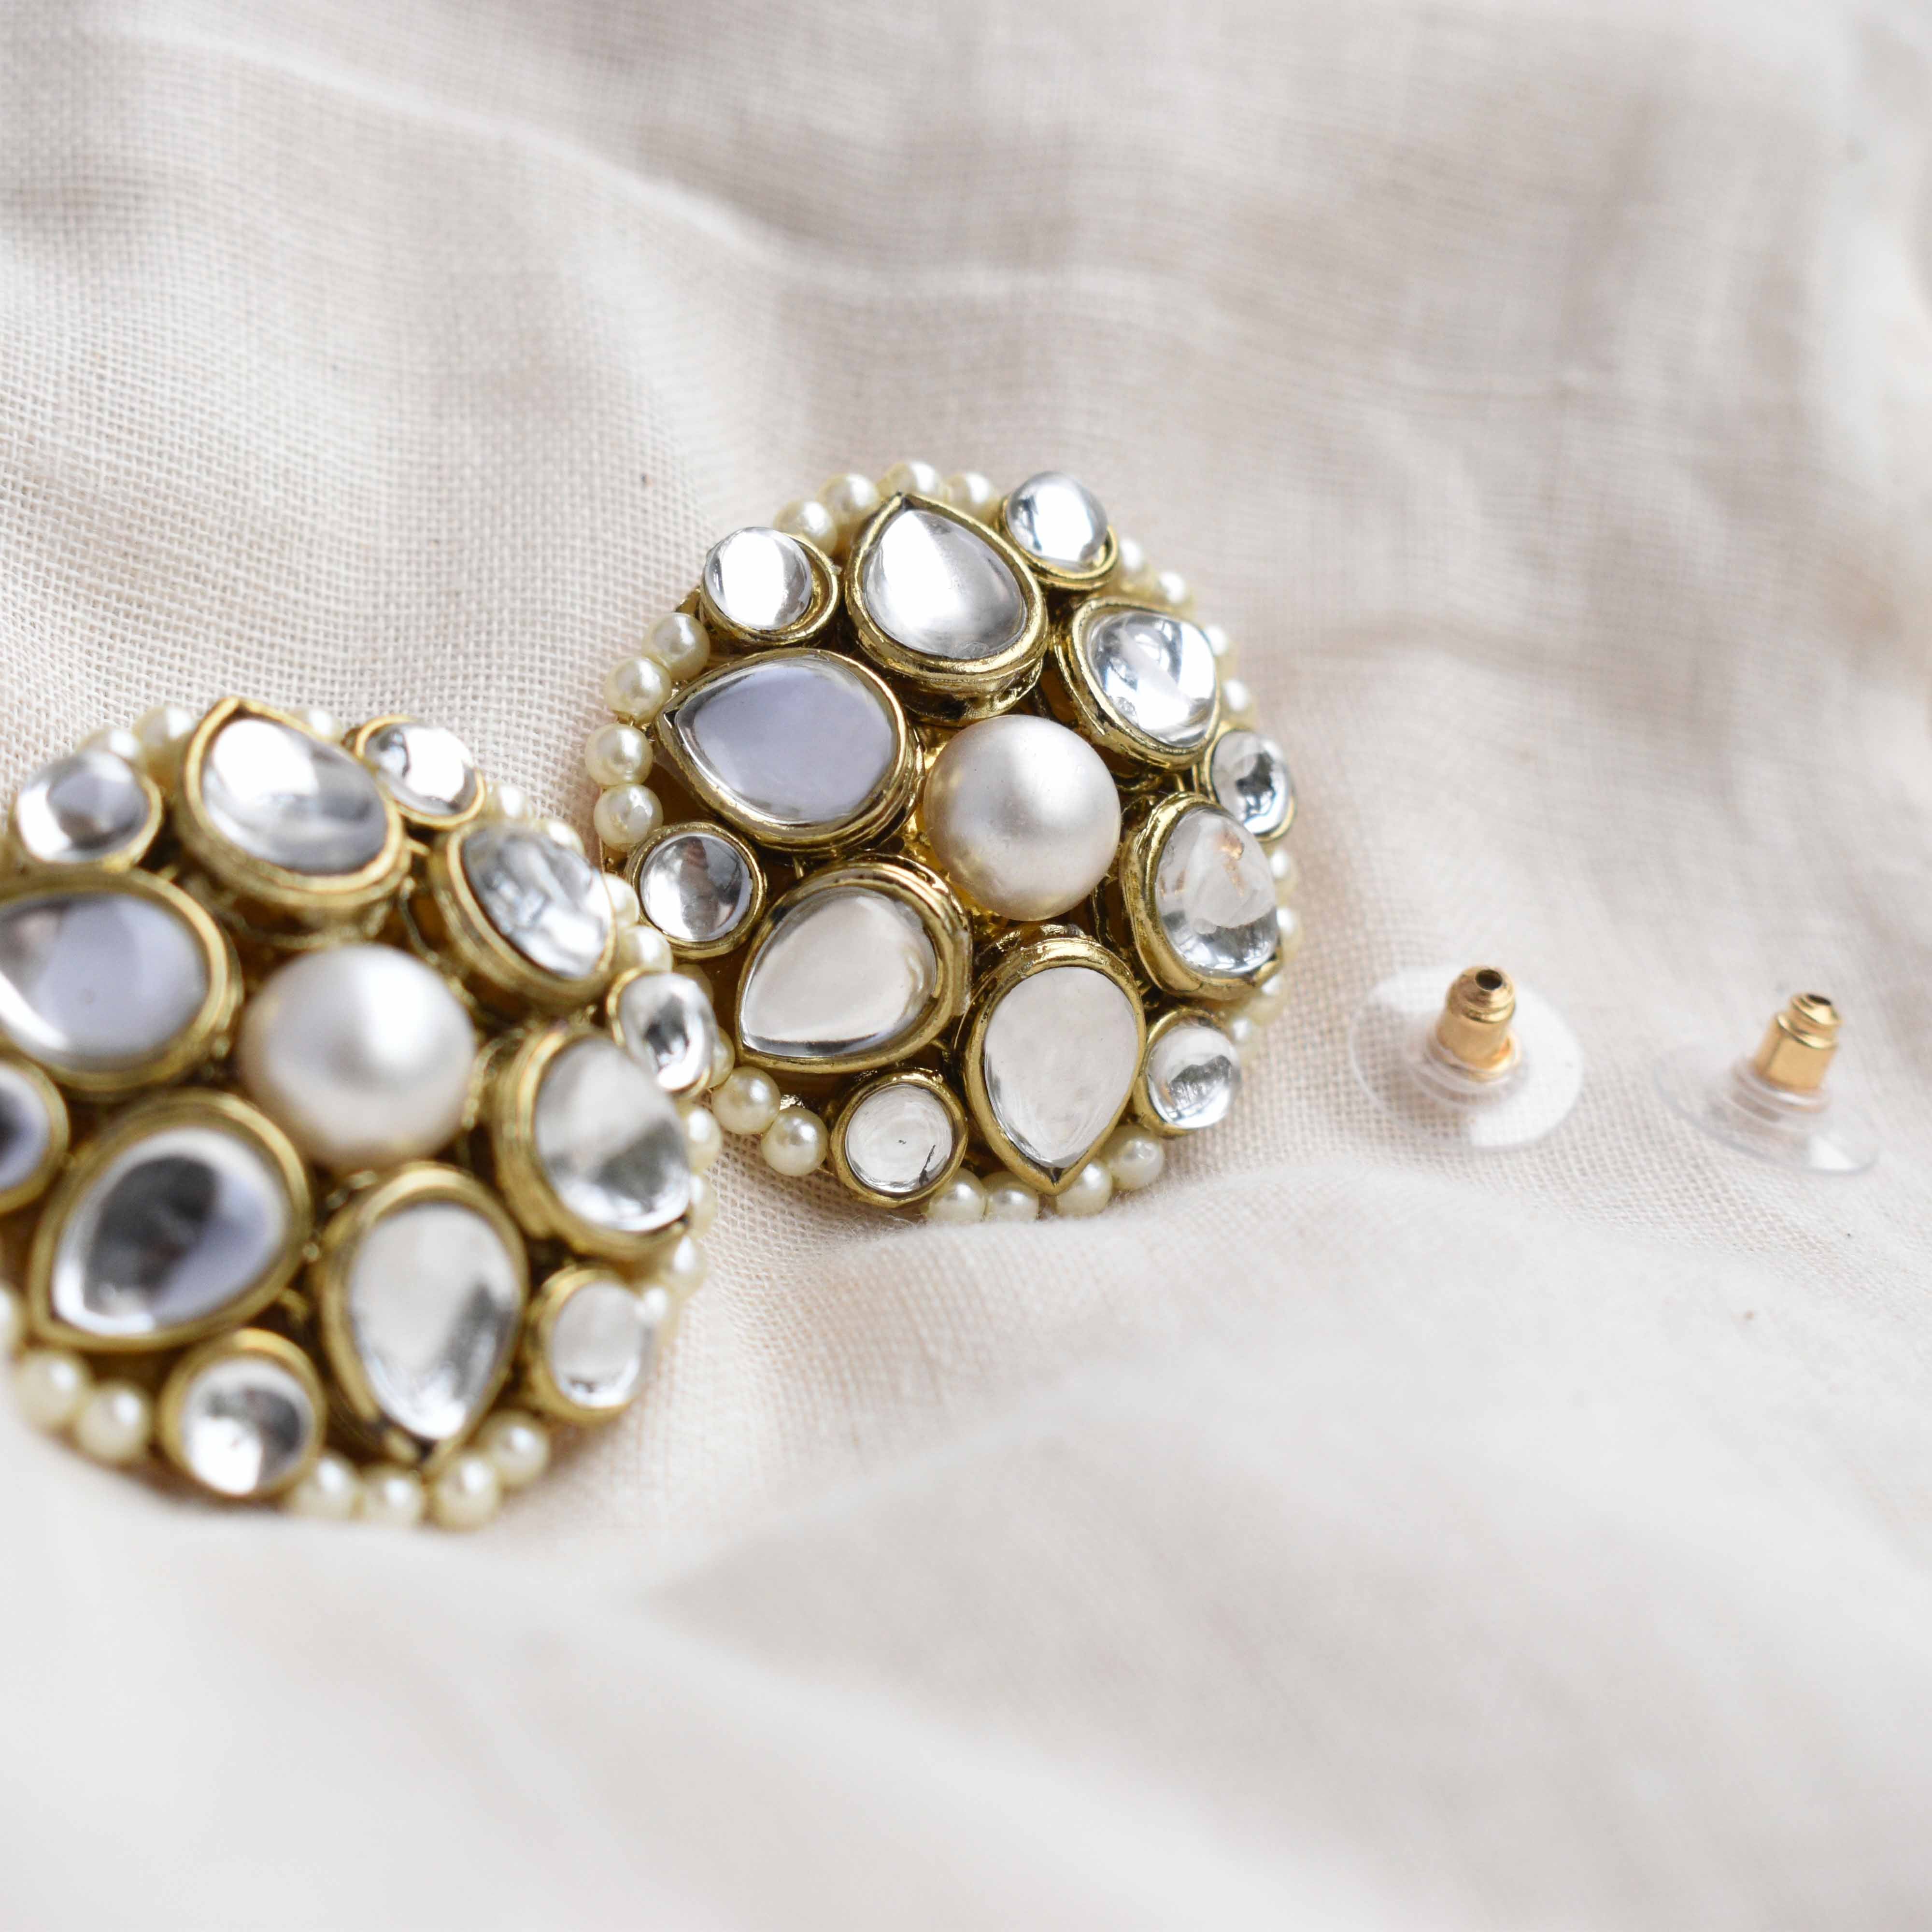 Beabhika Handmade Artificial Jewelry Kundan Earrings Golden Earrings Earrings With Pearls Kundan Wedding Jewelry Trendy Earrings Daily Wear Party Wear Traditional Ethnic Dress Jewelry Earrings Bridal Jewelry Set Online Cash On Delivery